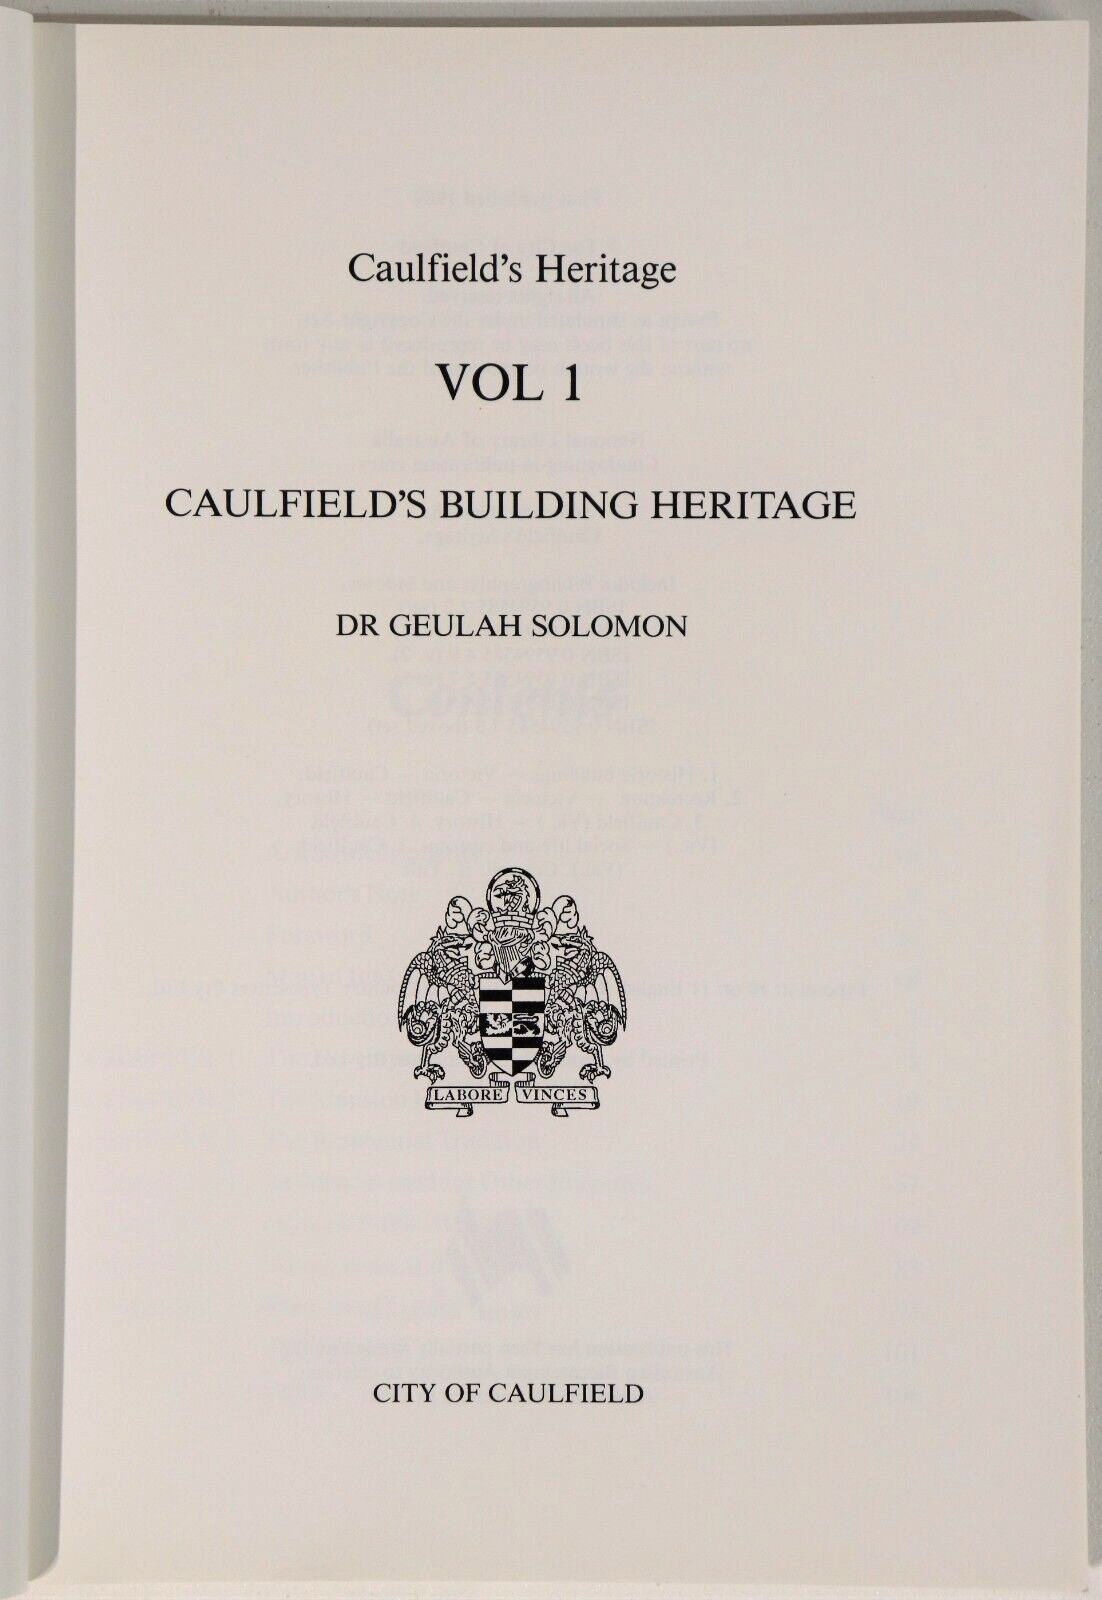 Caulfield's Heritage by Dr G Solomon - 1989 - 4 Vol. Australian History Book Set - 0